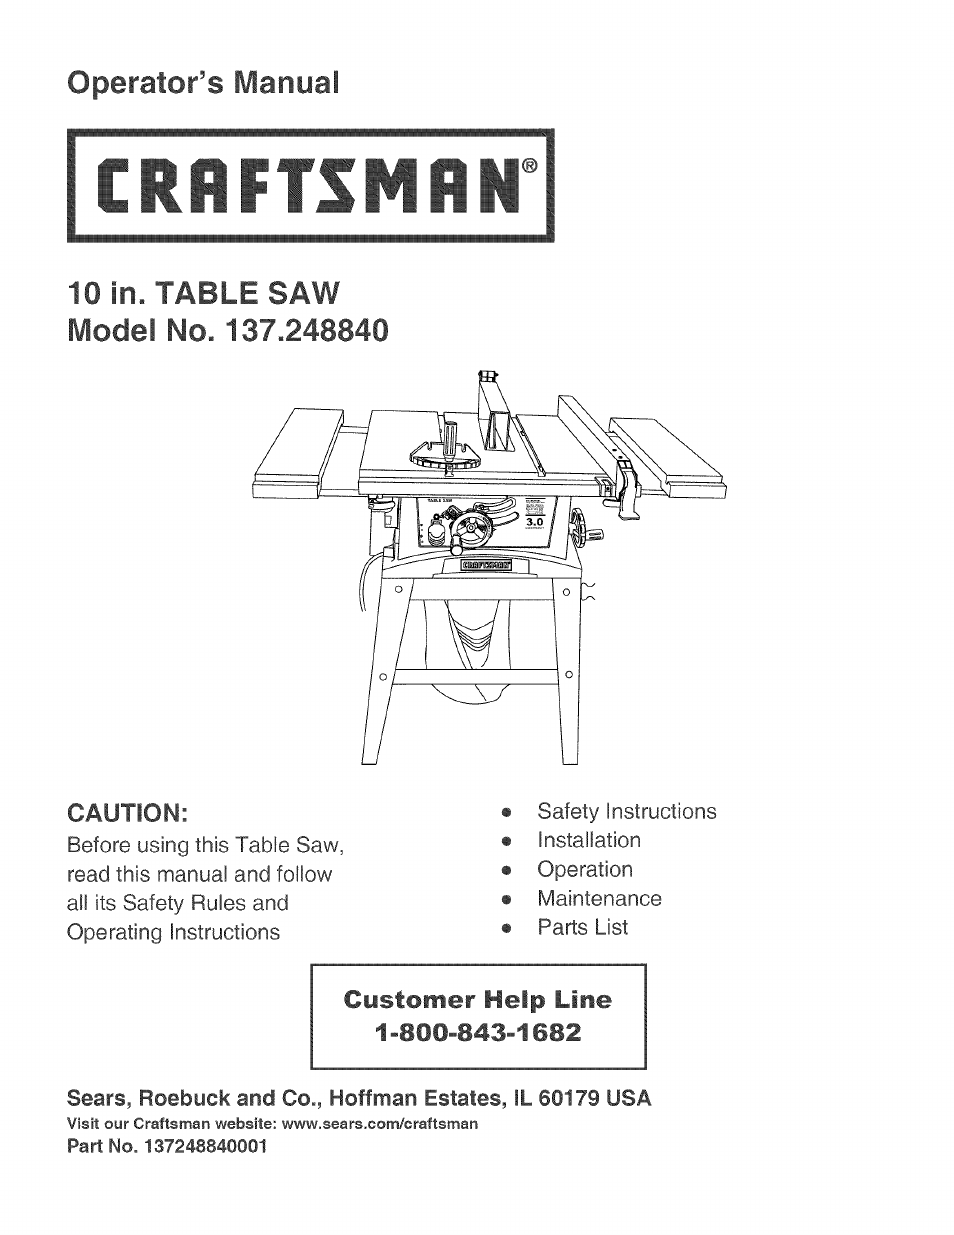 Craftsman 137.248840 User Manual | 30 pages